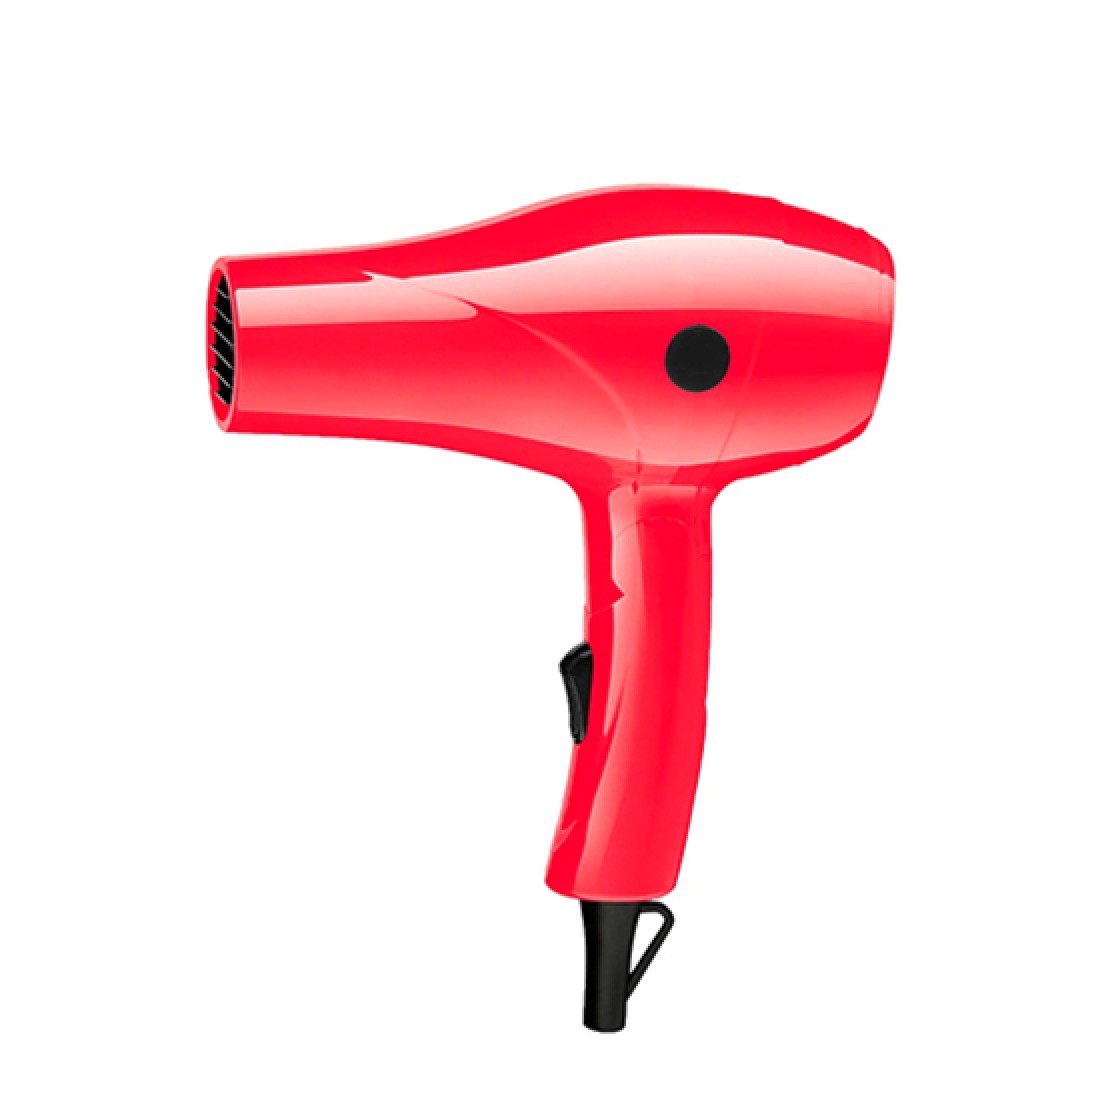 AlbiPro Travel Size hair dryer Red 1200 Watt 3250R - 9600064 HAIR ELECTRICALS